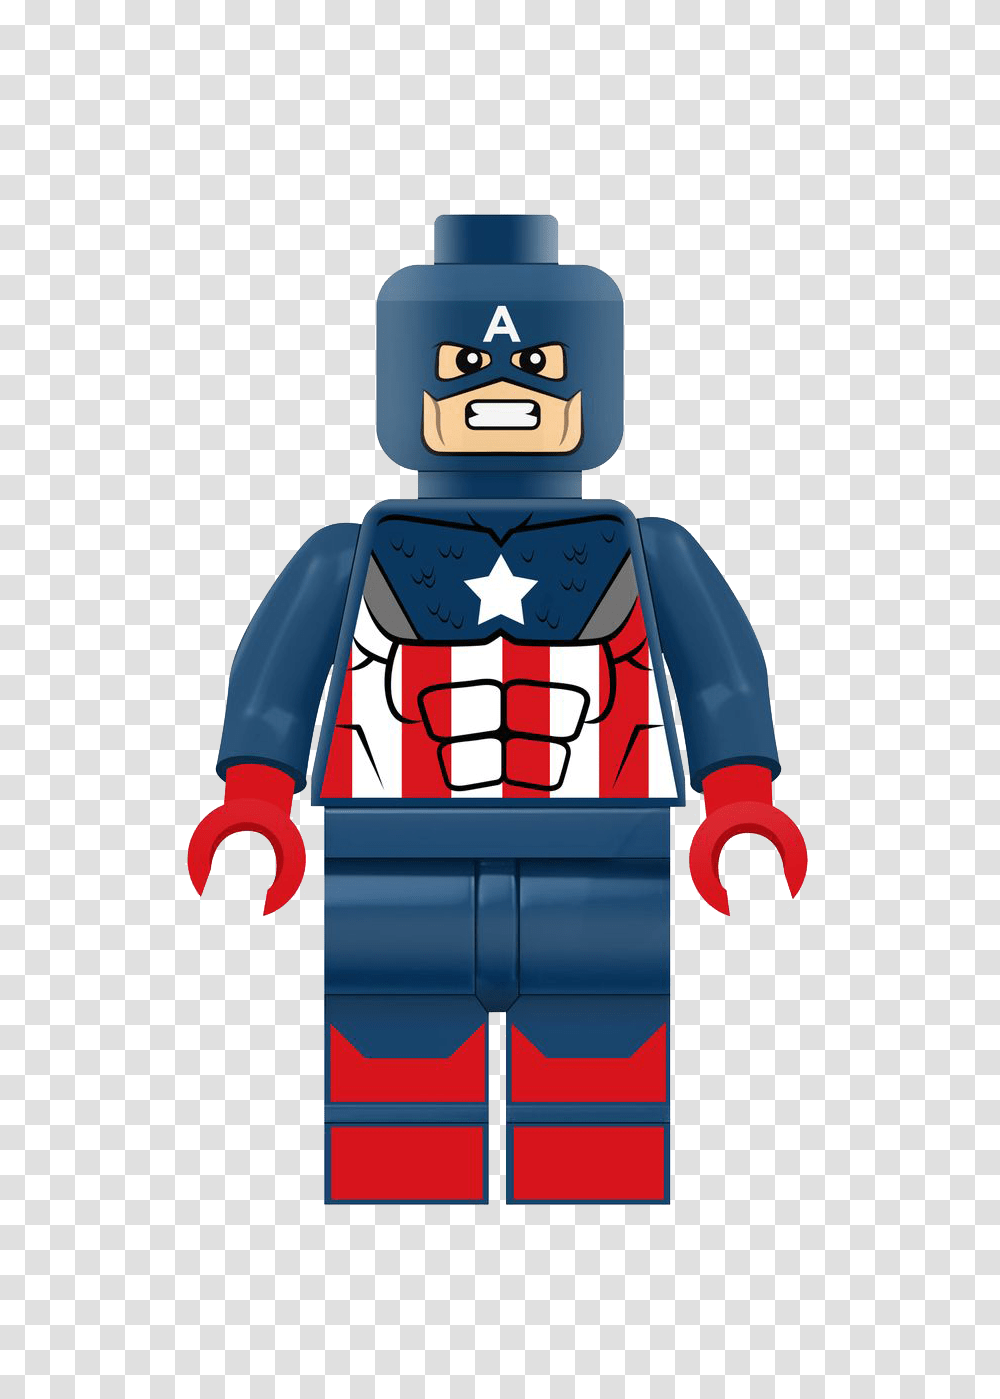 Captain America Lego Clipart, Robot, Toy, Nutcracker Transparent Png